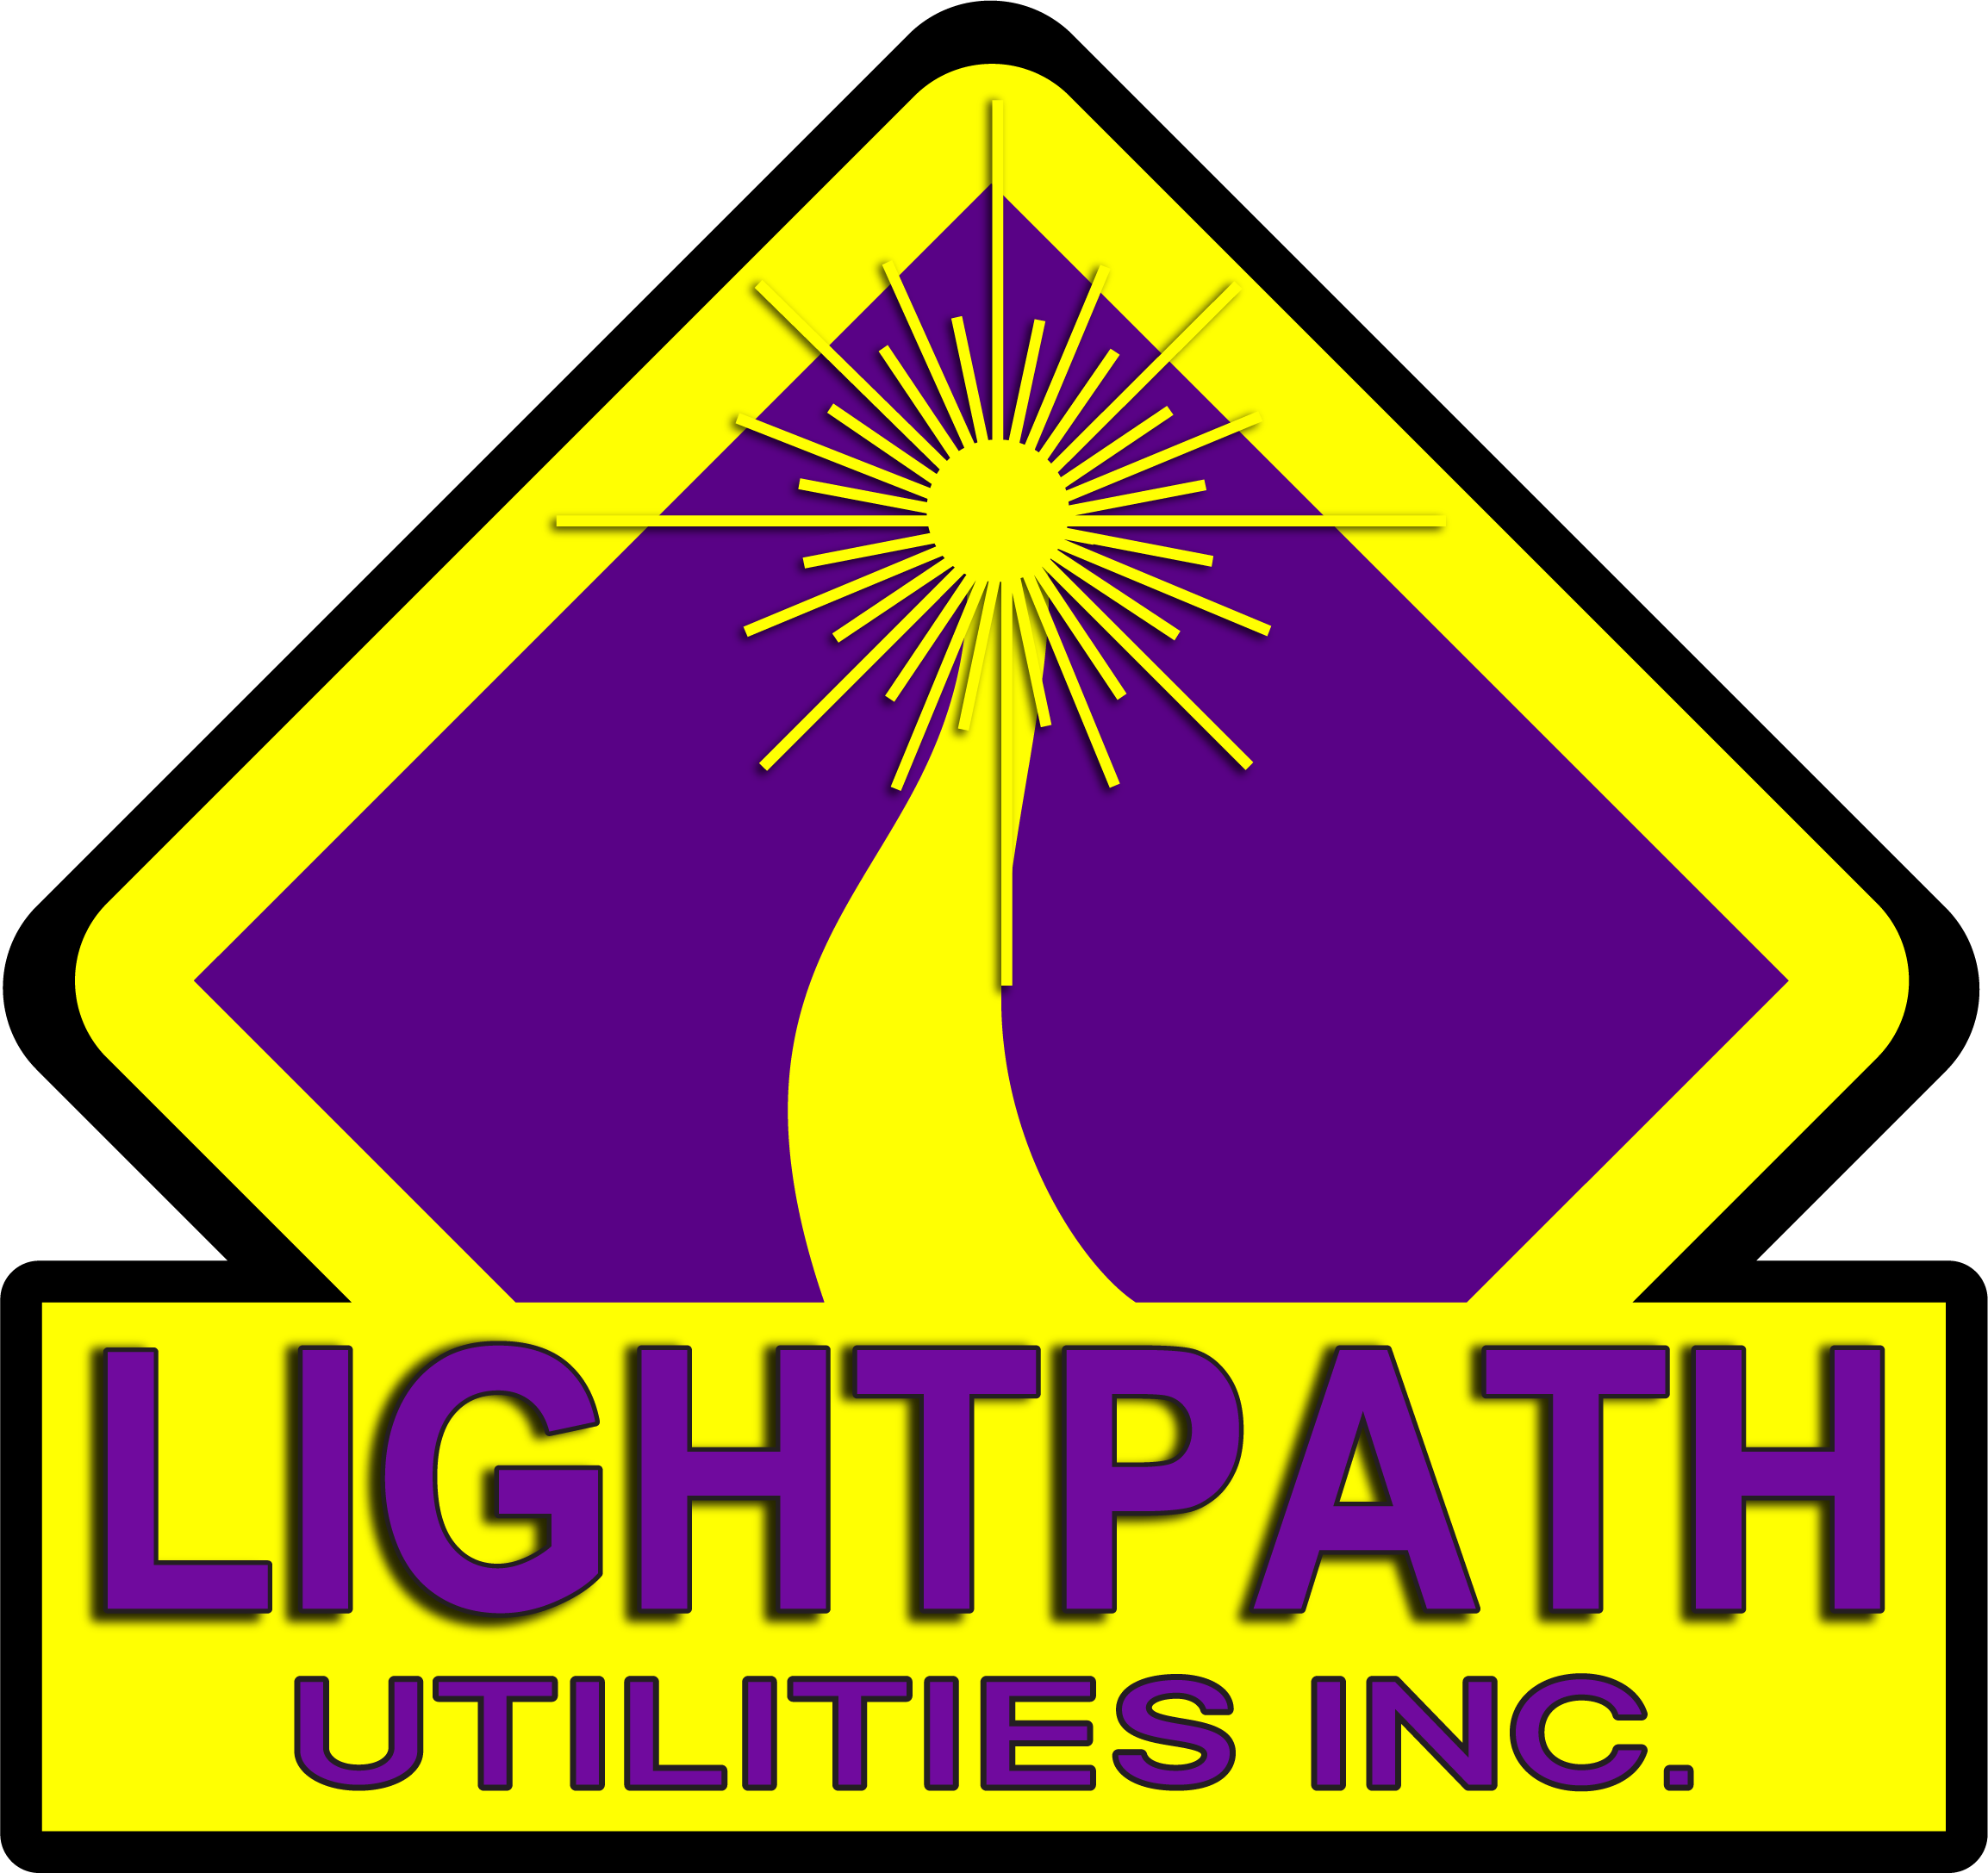 Lightpath Utilities Inc.